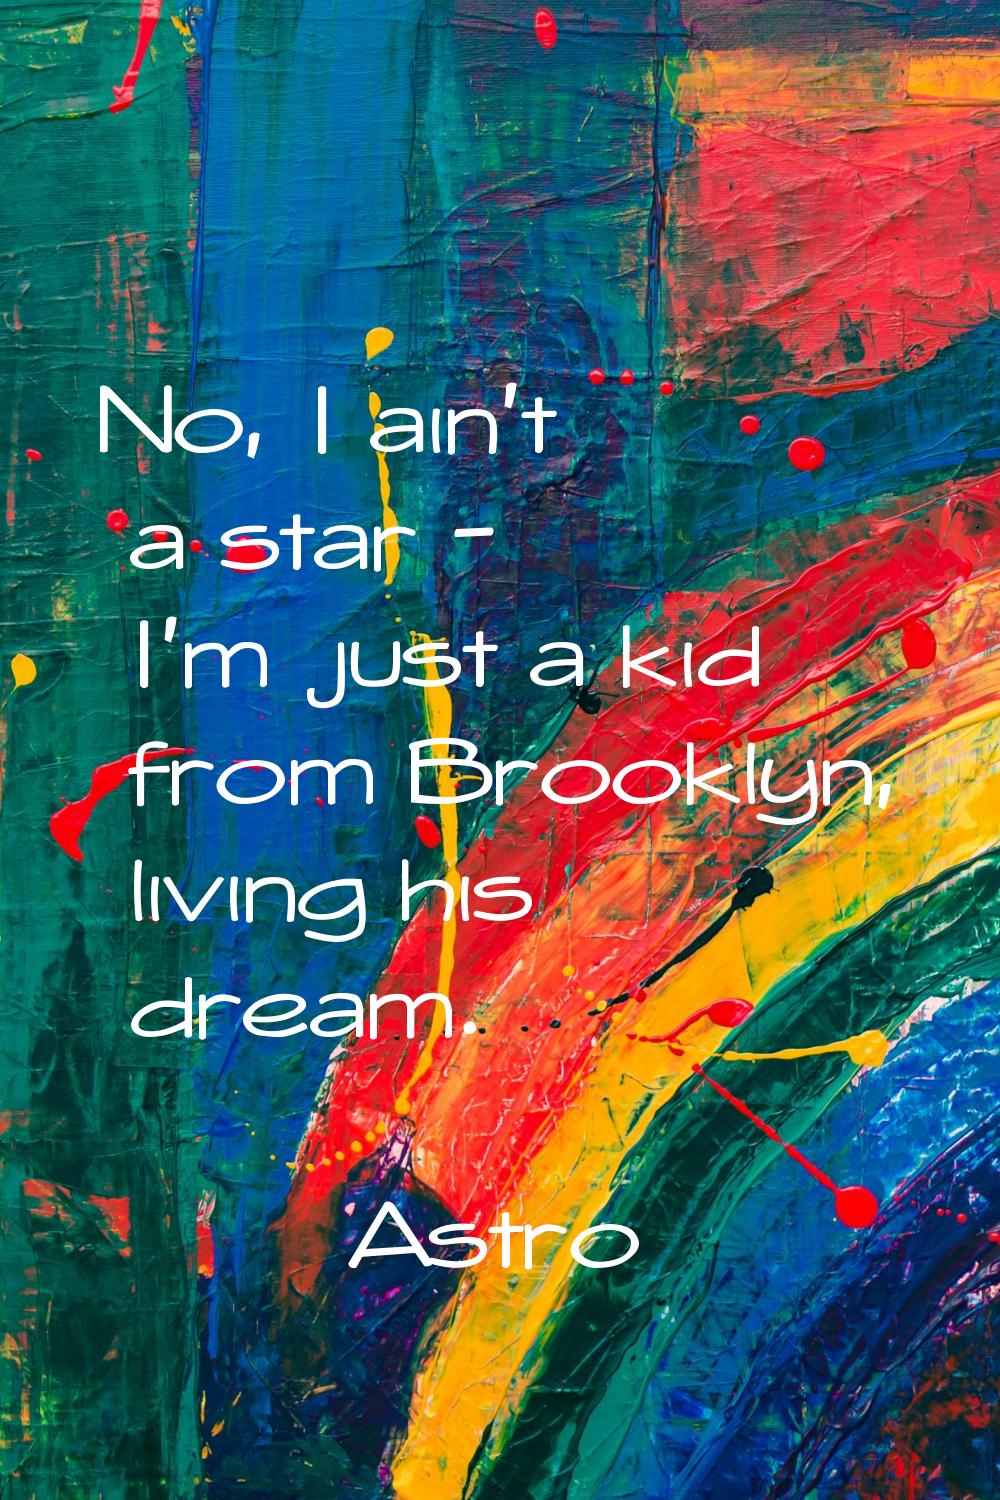 No, I ain't a star - I'm just a kid from Brooklyn, living his dream.